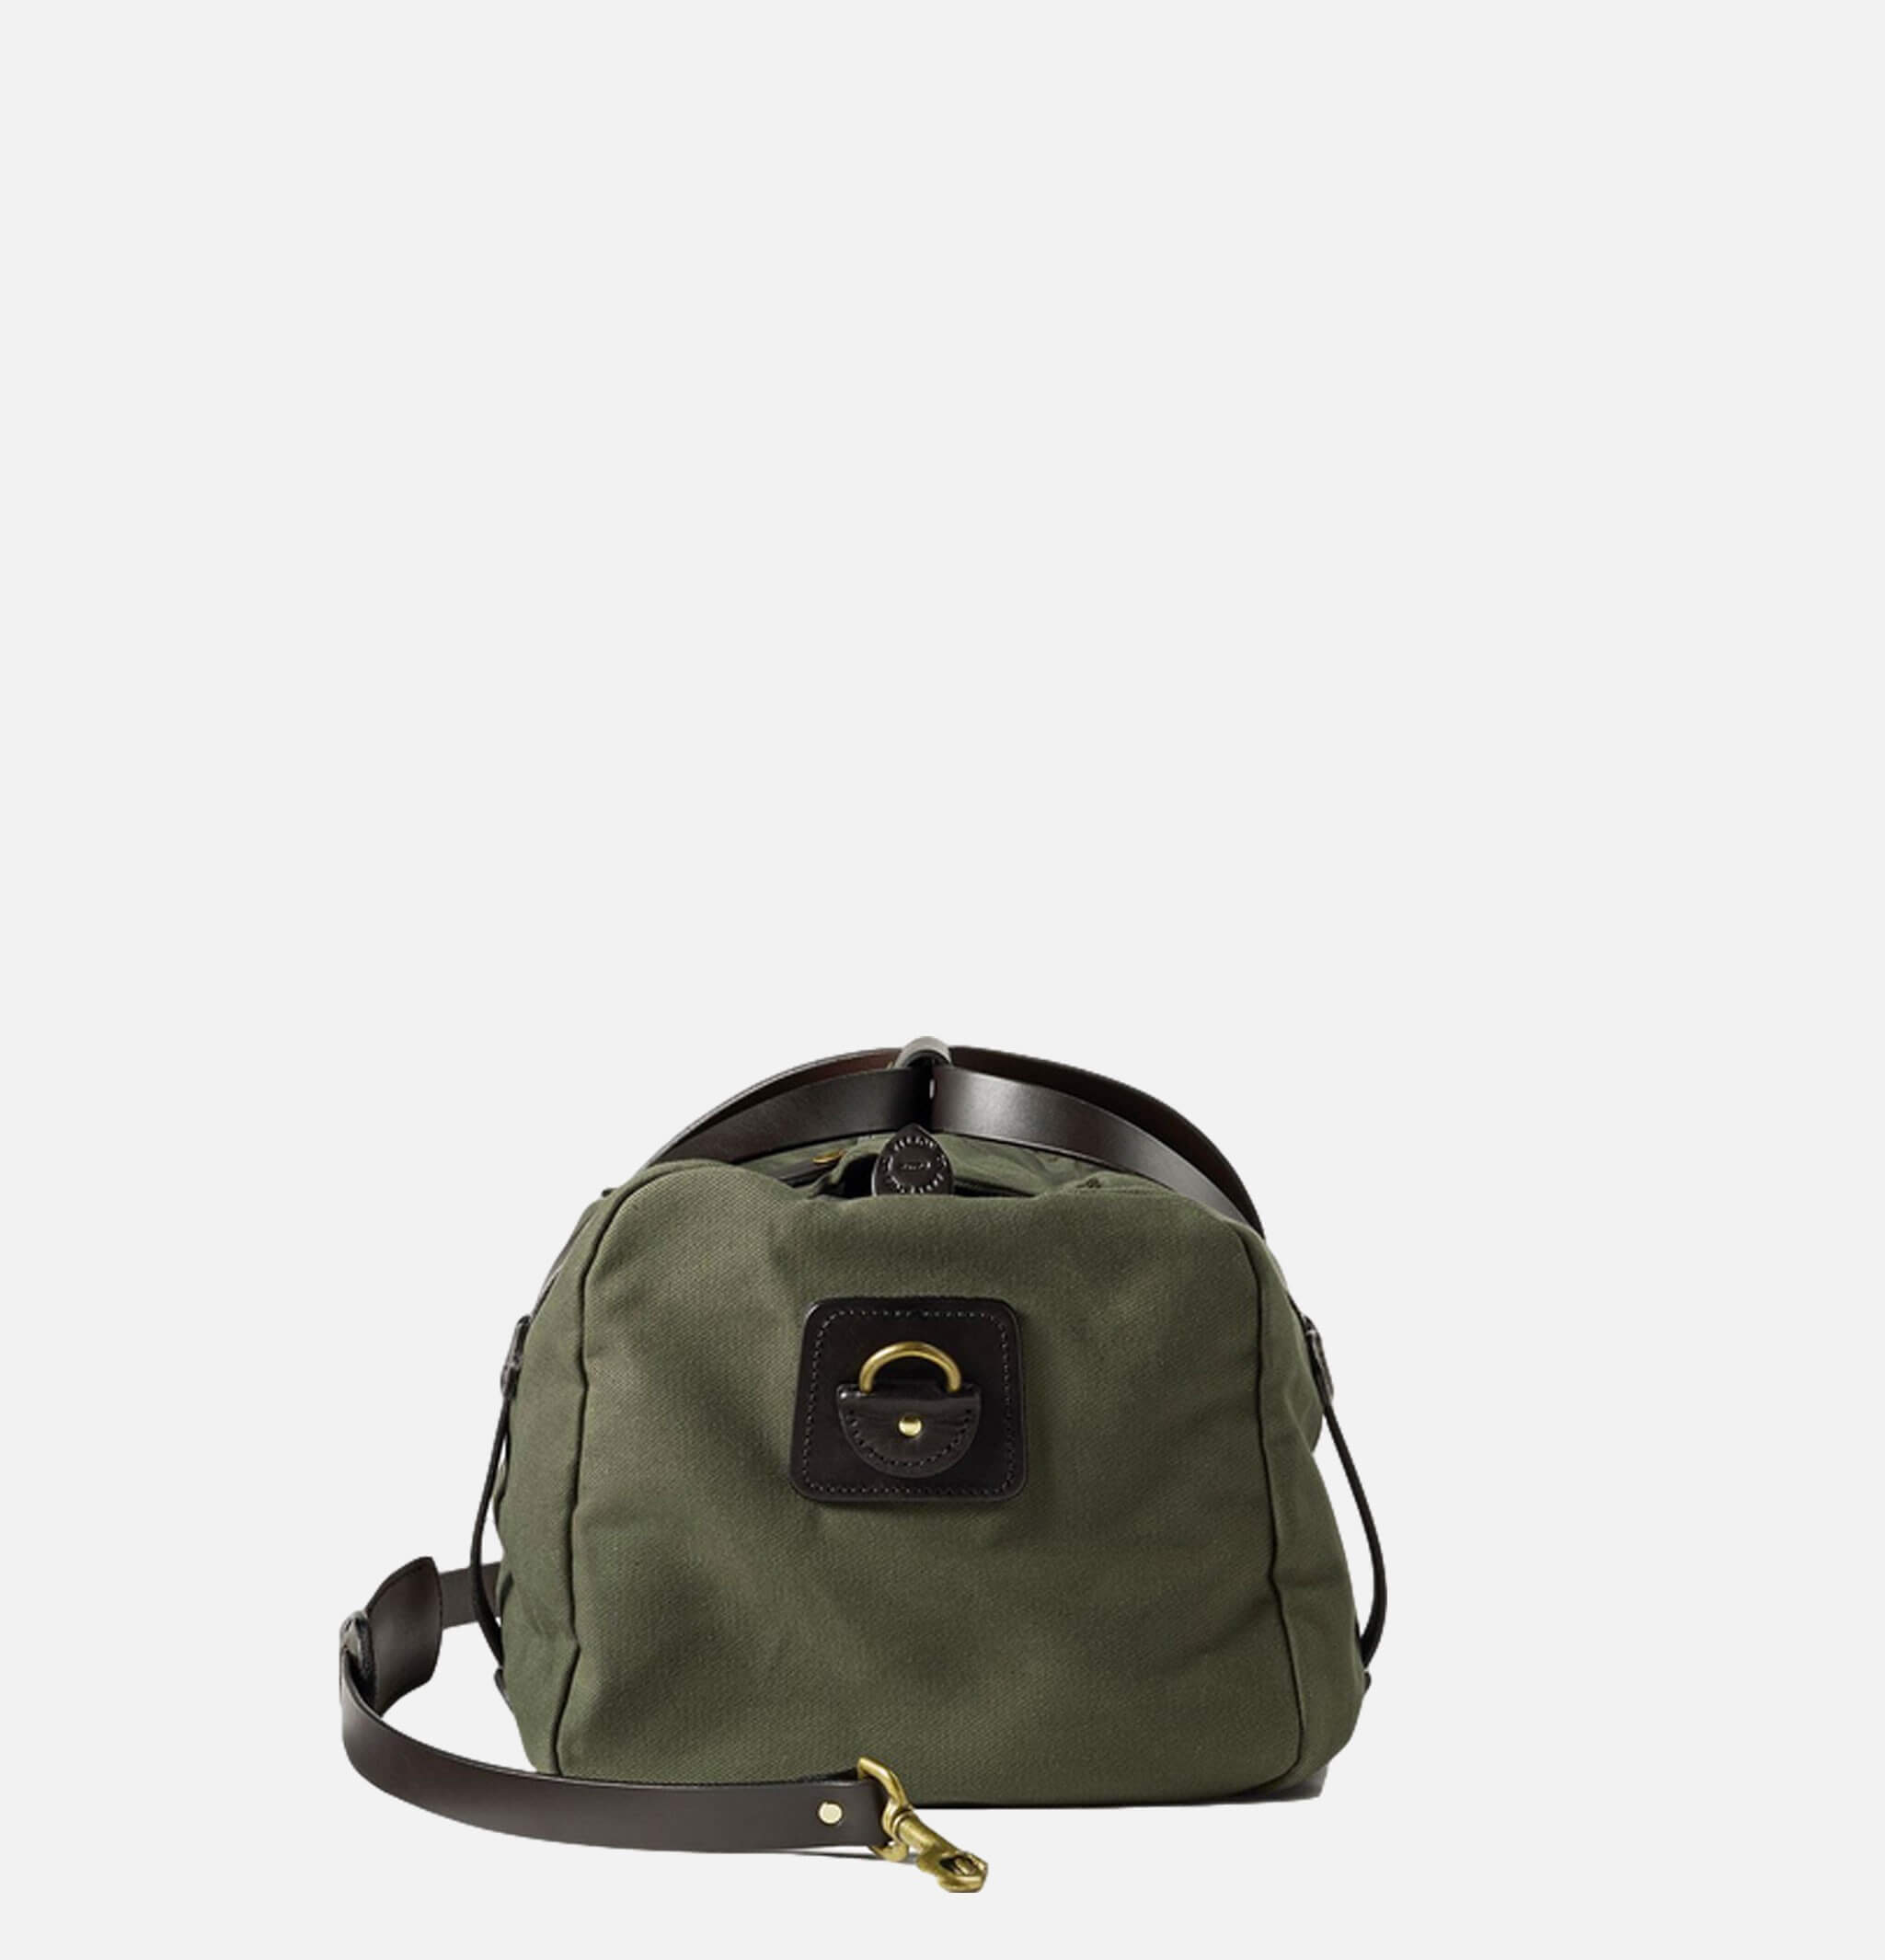 70220 - Small Duffle Bag Otter Green